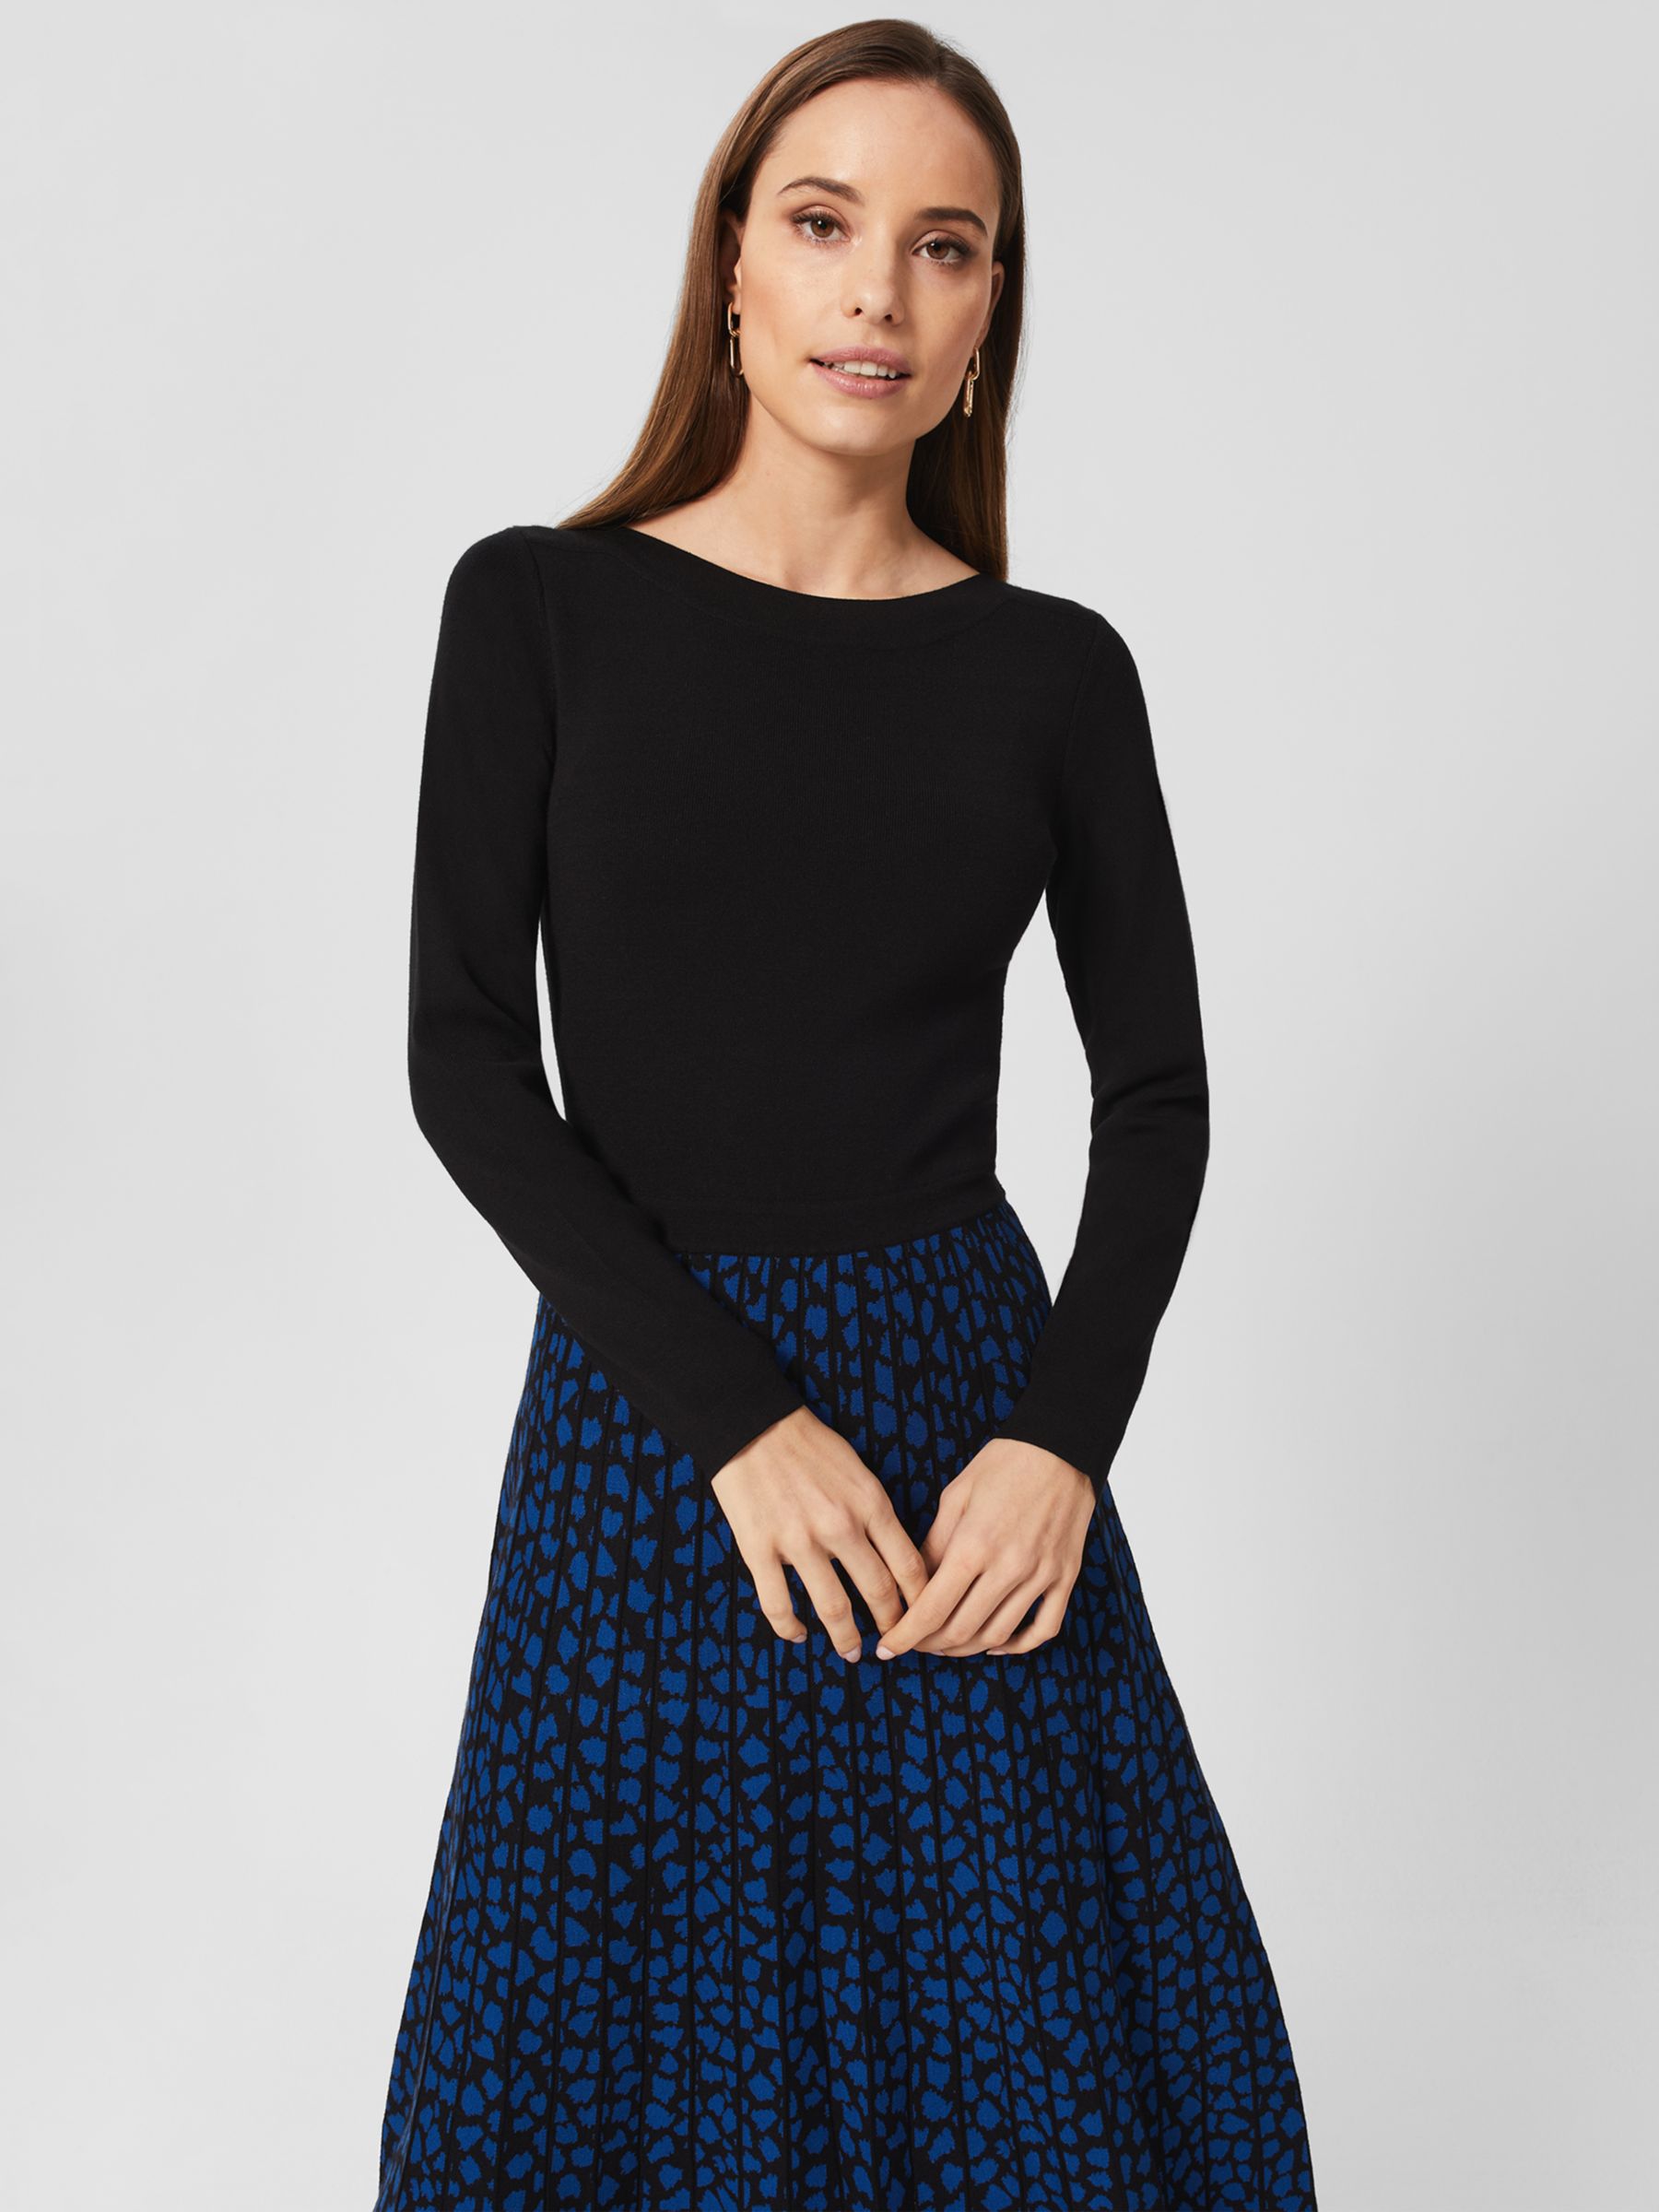 Hobbs Petite Elena Knit Midi Dress, Black/Blue, 16